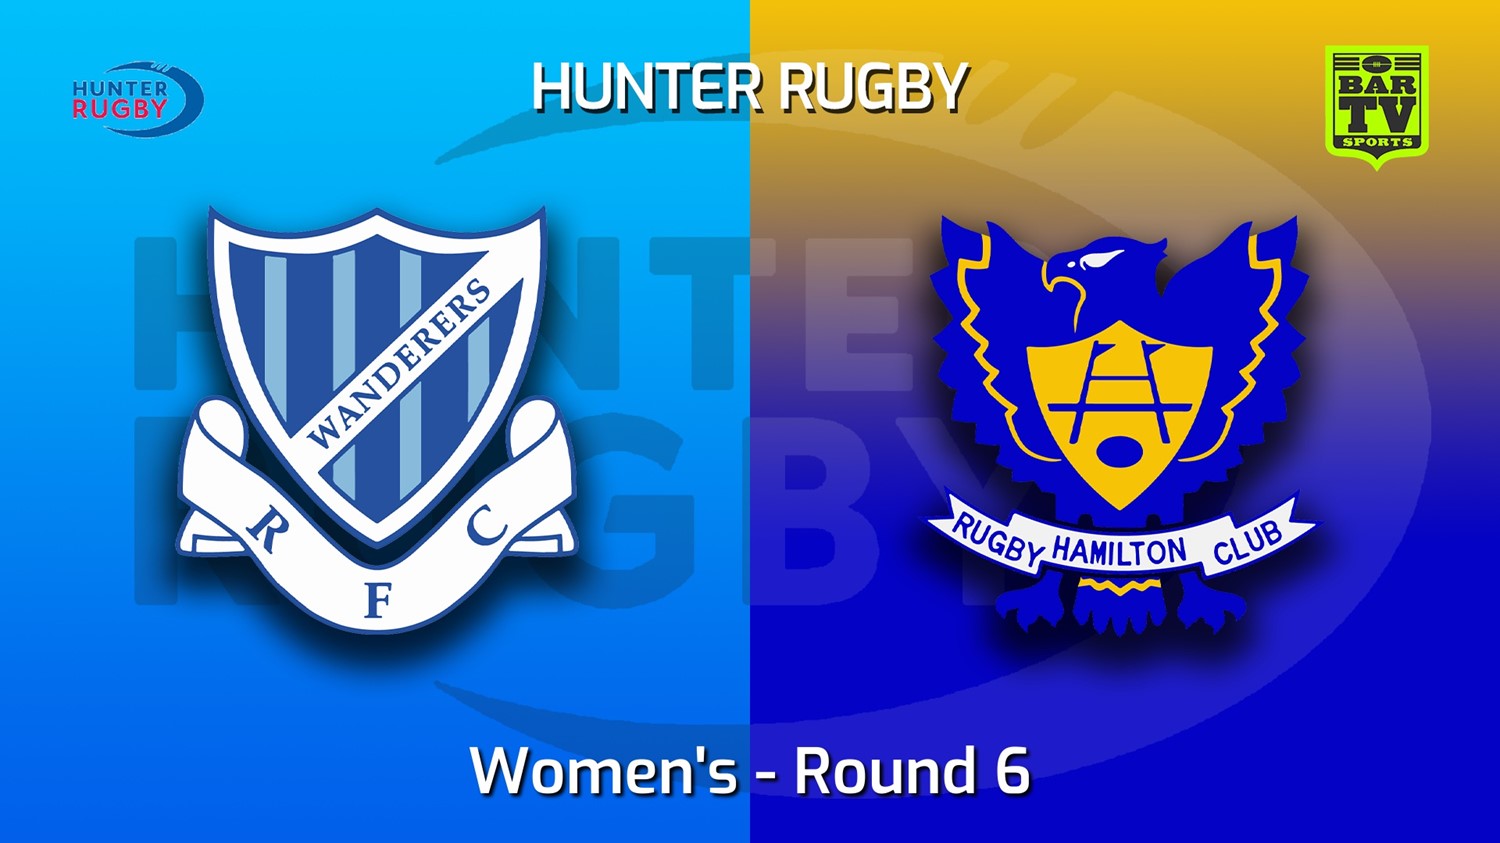 220528-Hunter Rugby Round 6 - Women's - Wanderers v Hamilton Hawks Slate Image